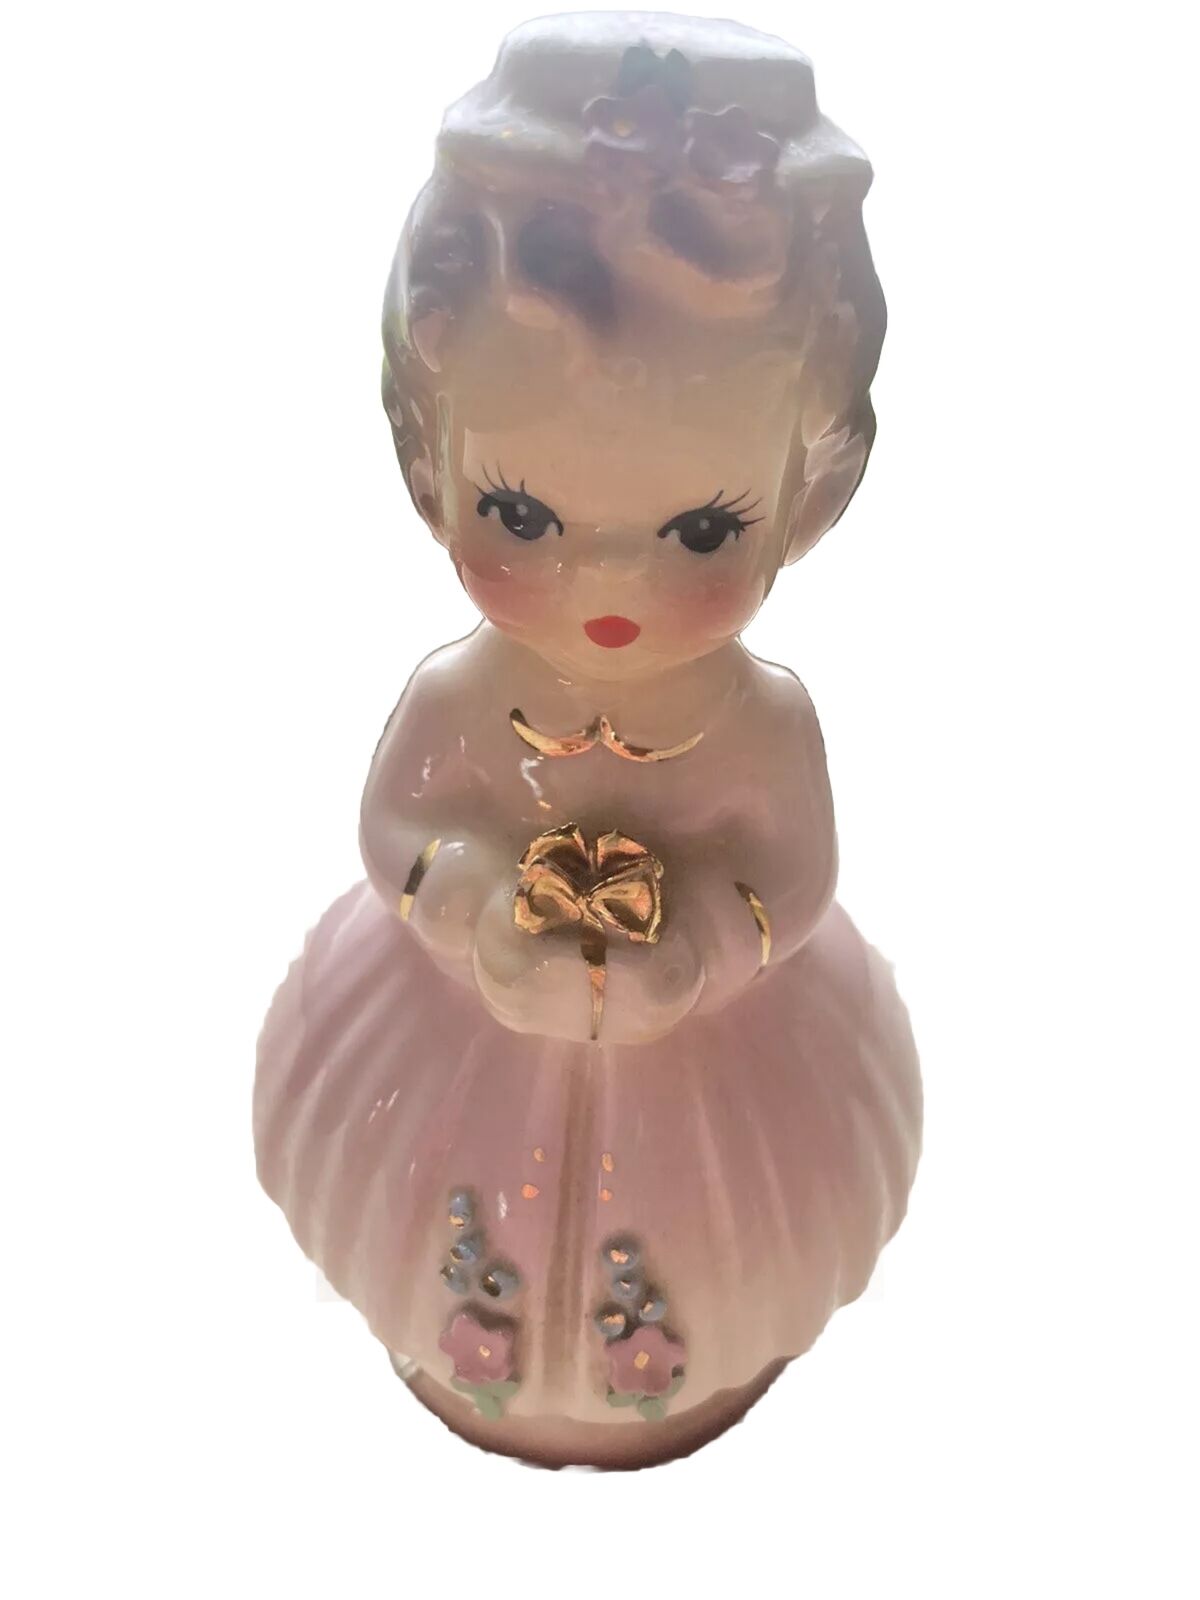 Vintage 1953 Josef Original ‘Hedy’ Girl Holding Gift Figurine California Pink